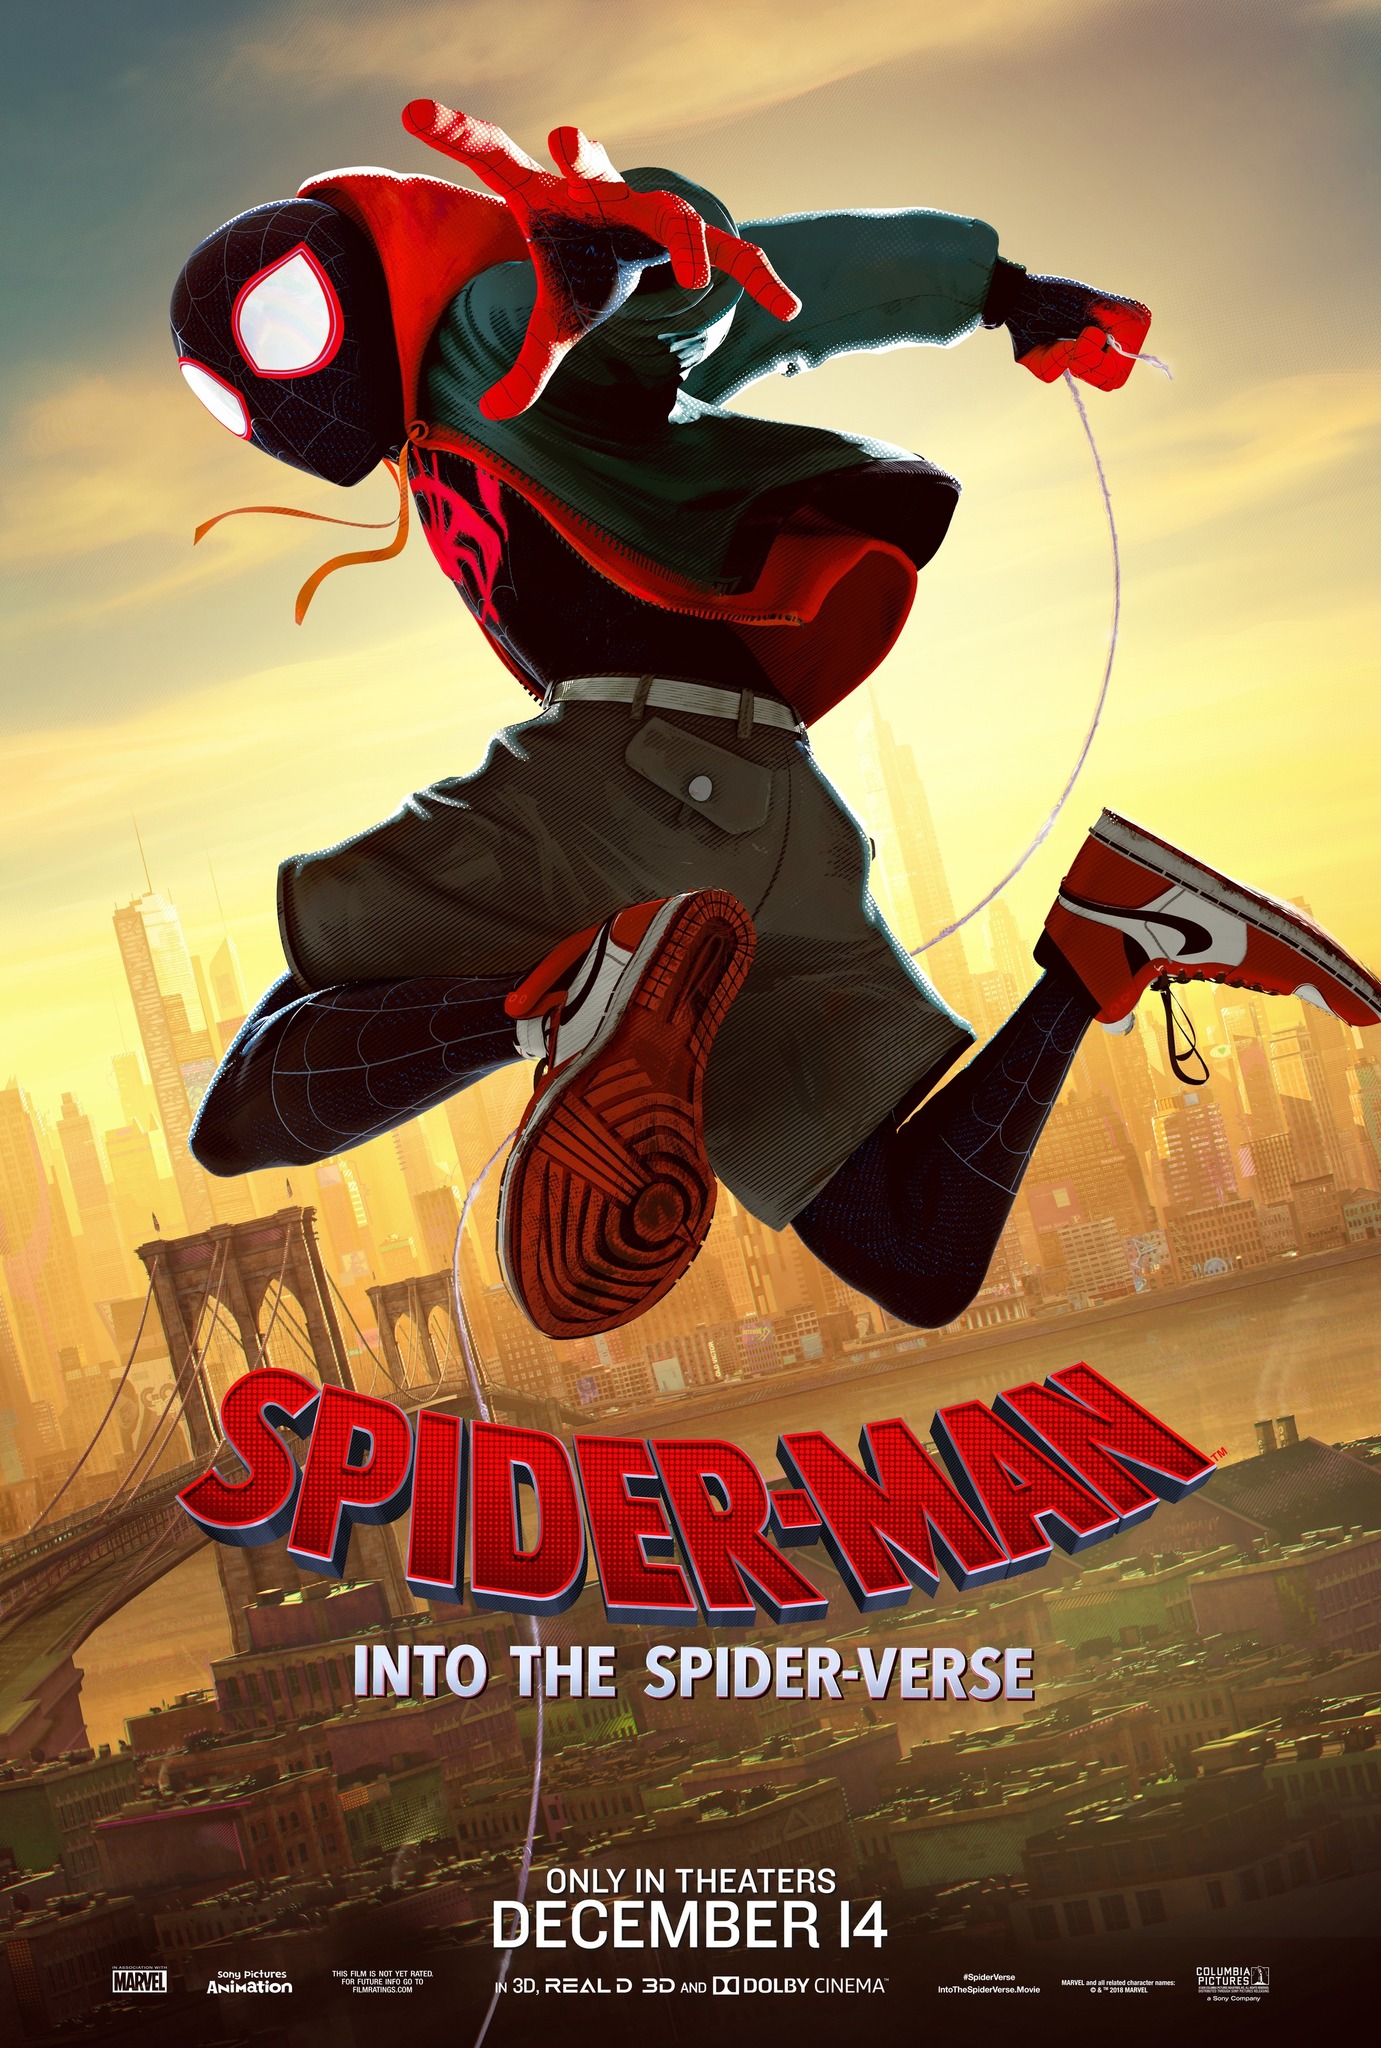 Teenage boy in a rad spider costume jumping through air.